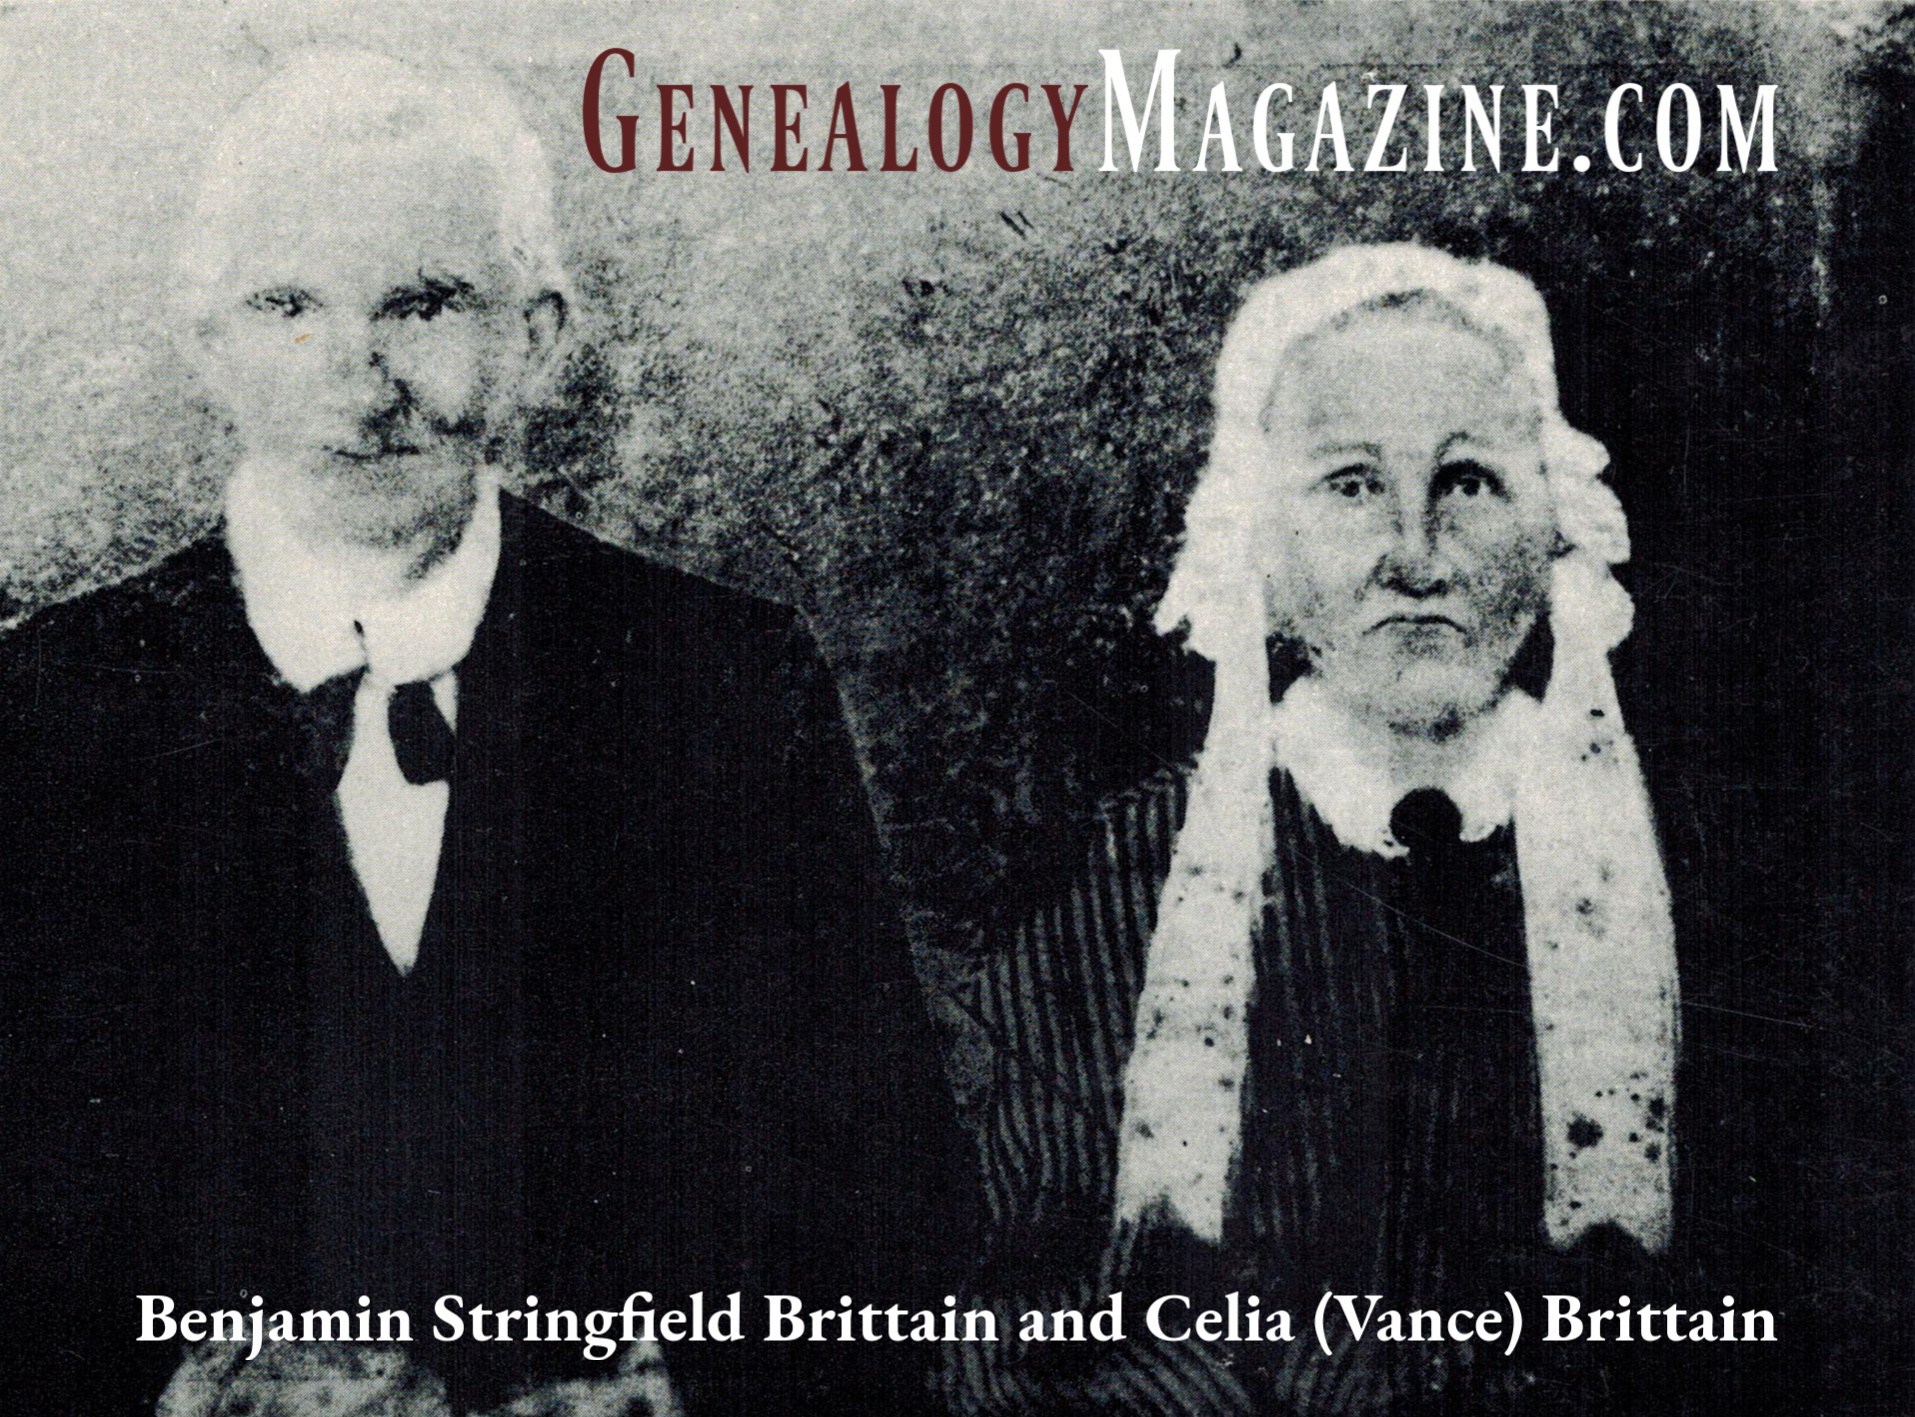 Benjamin Stringfield Brittain and Celia Vance Brittain